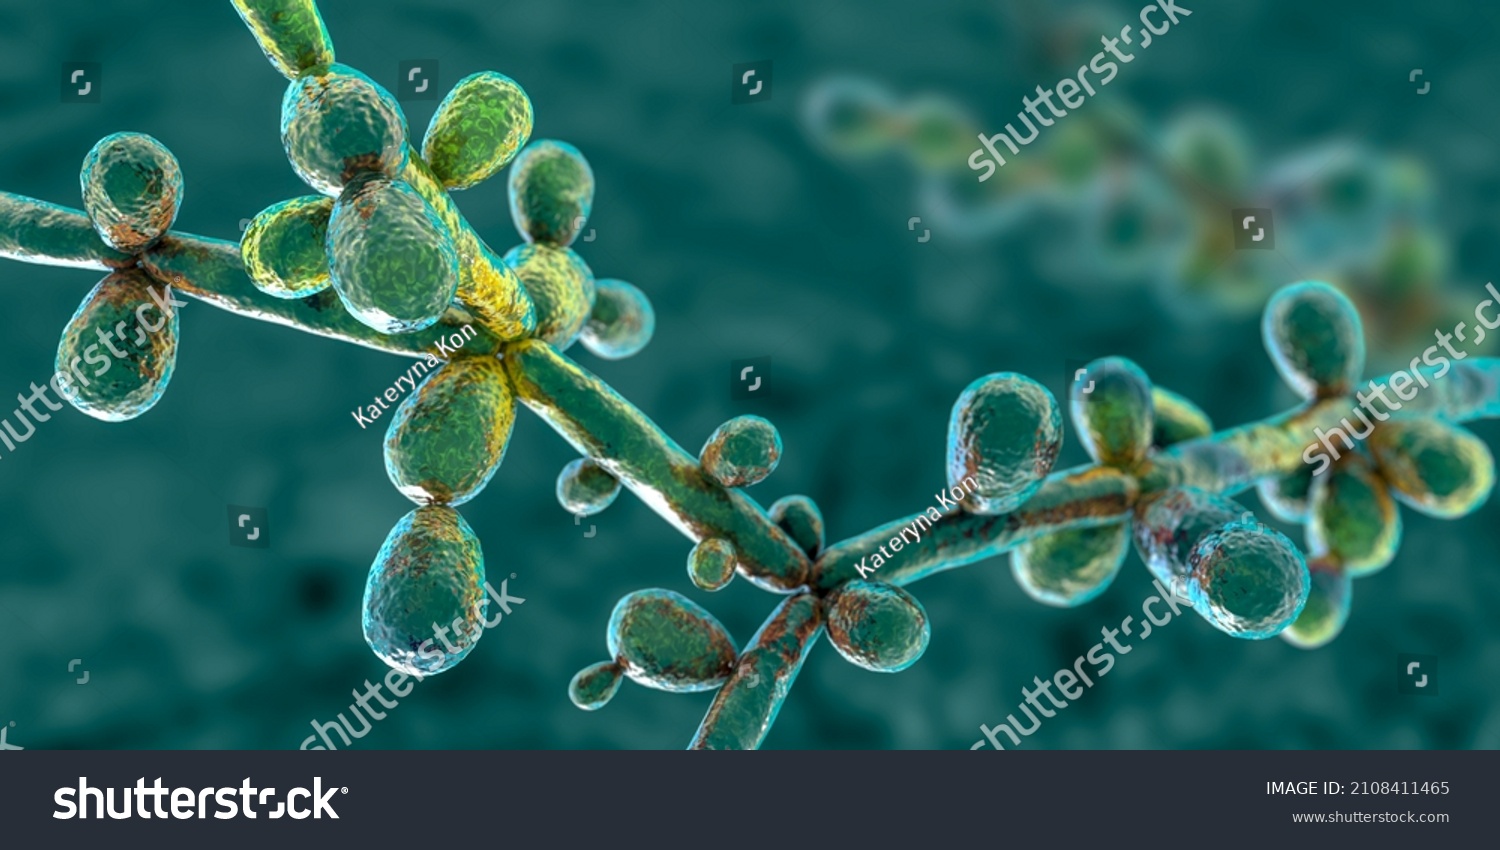 Candida Tropicalis Yeasts Microscopic Fungi That Stock Illustration